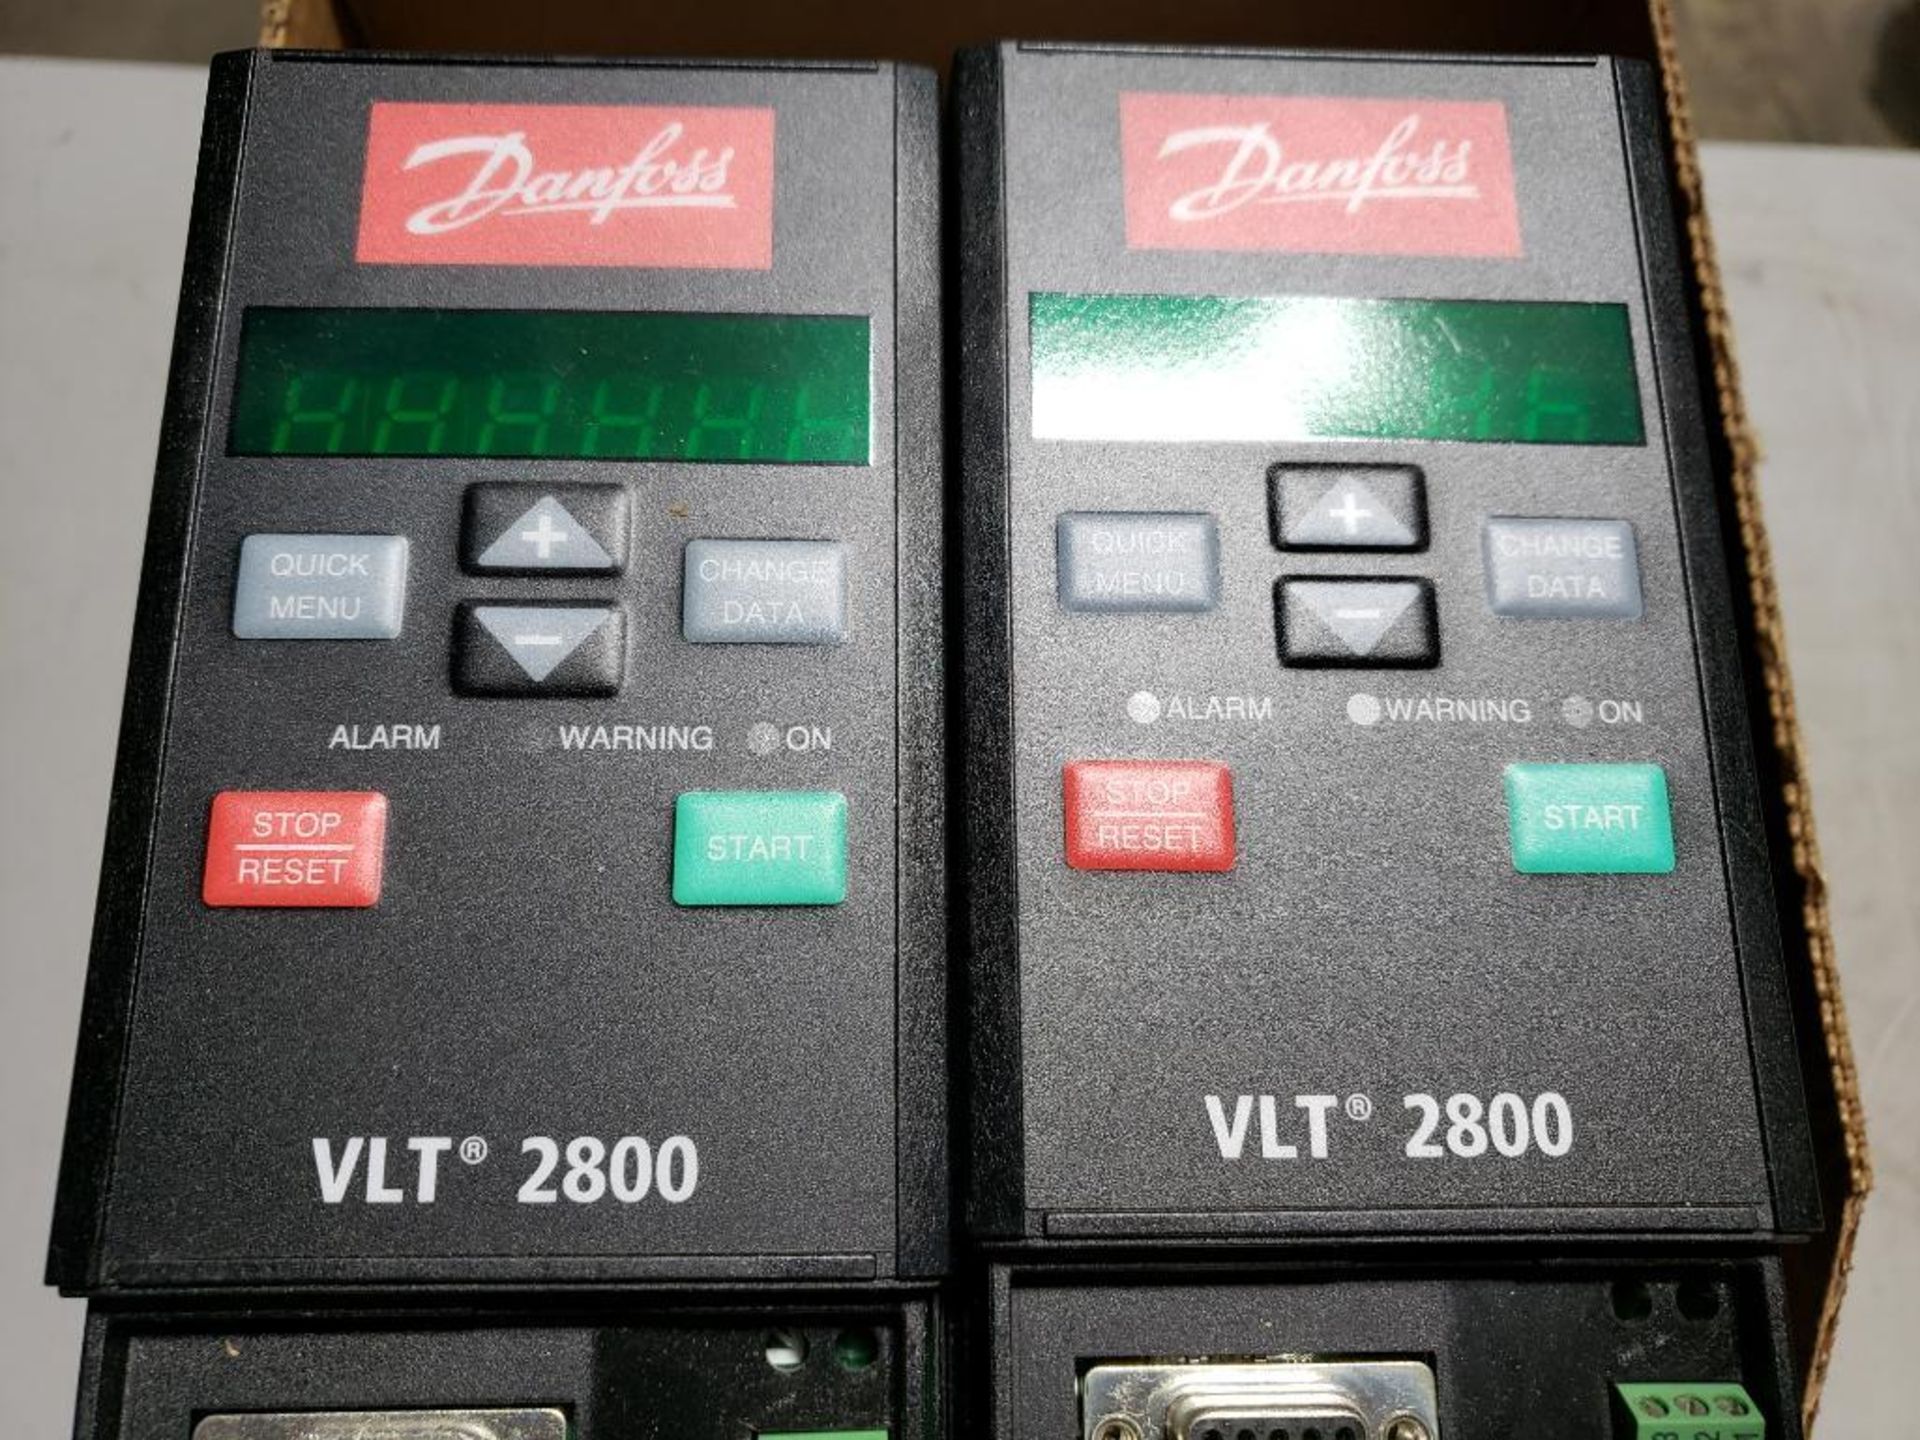 Qty 2 - Danfoss drive. VLT-2800. Part number 195N1001. - Image 3 of 5